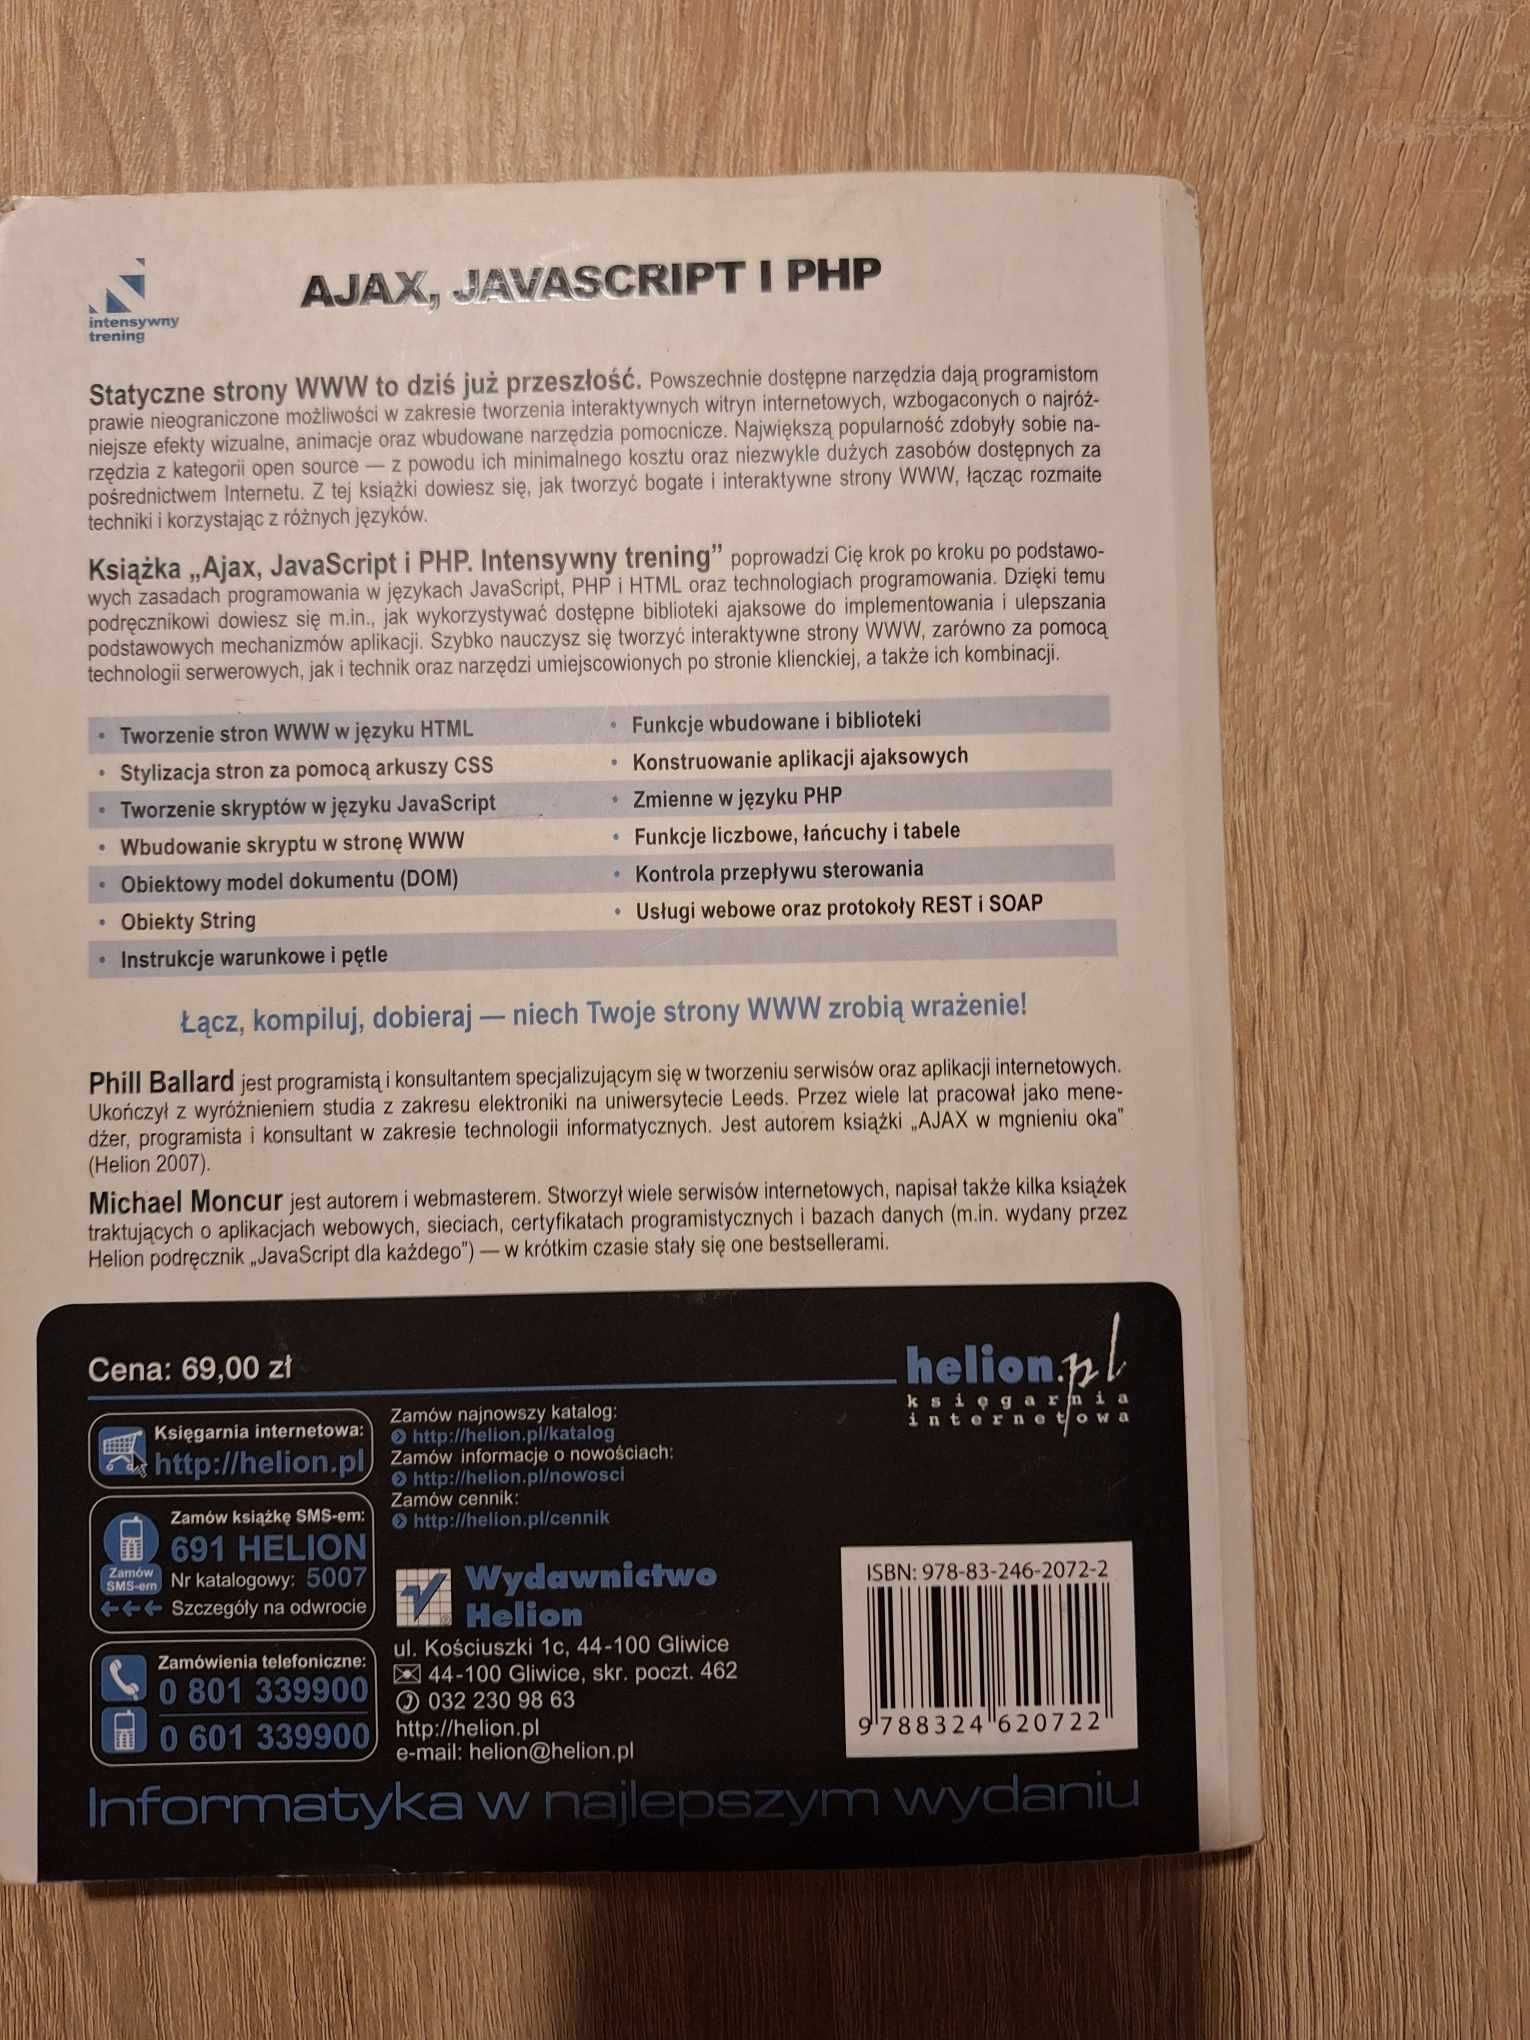 Książka "Ajax, Javascript i PHP. Intensywny trening"